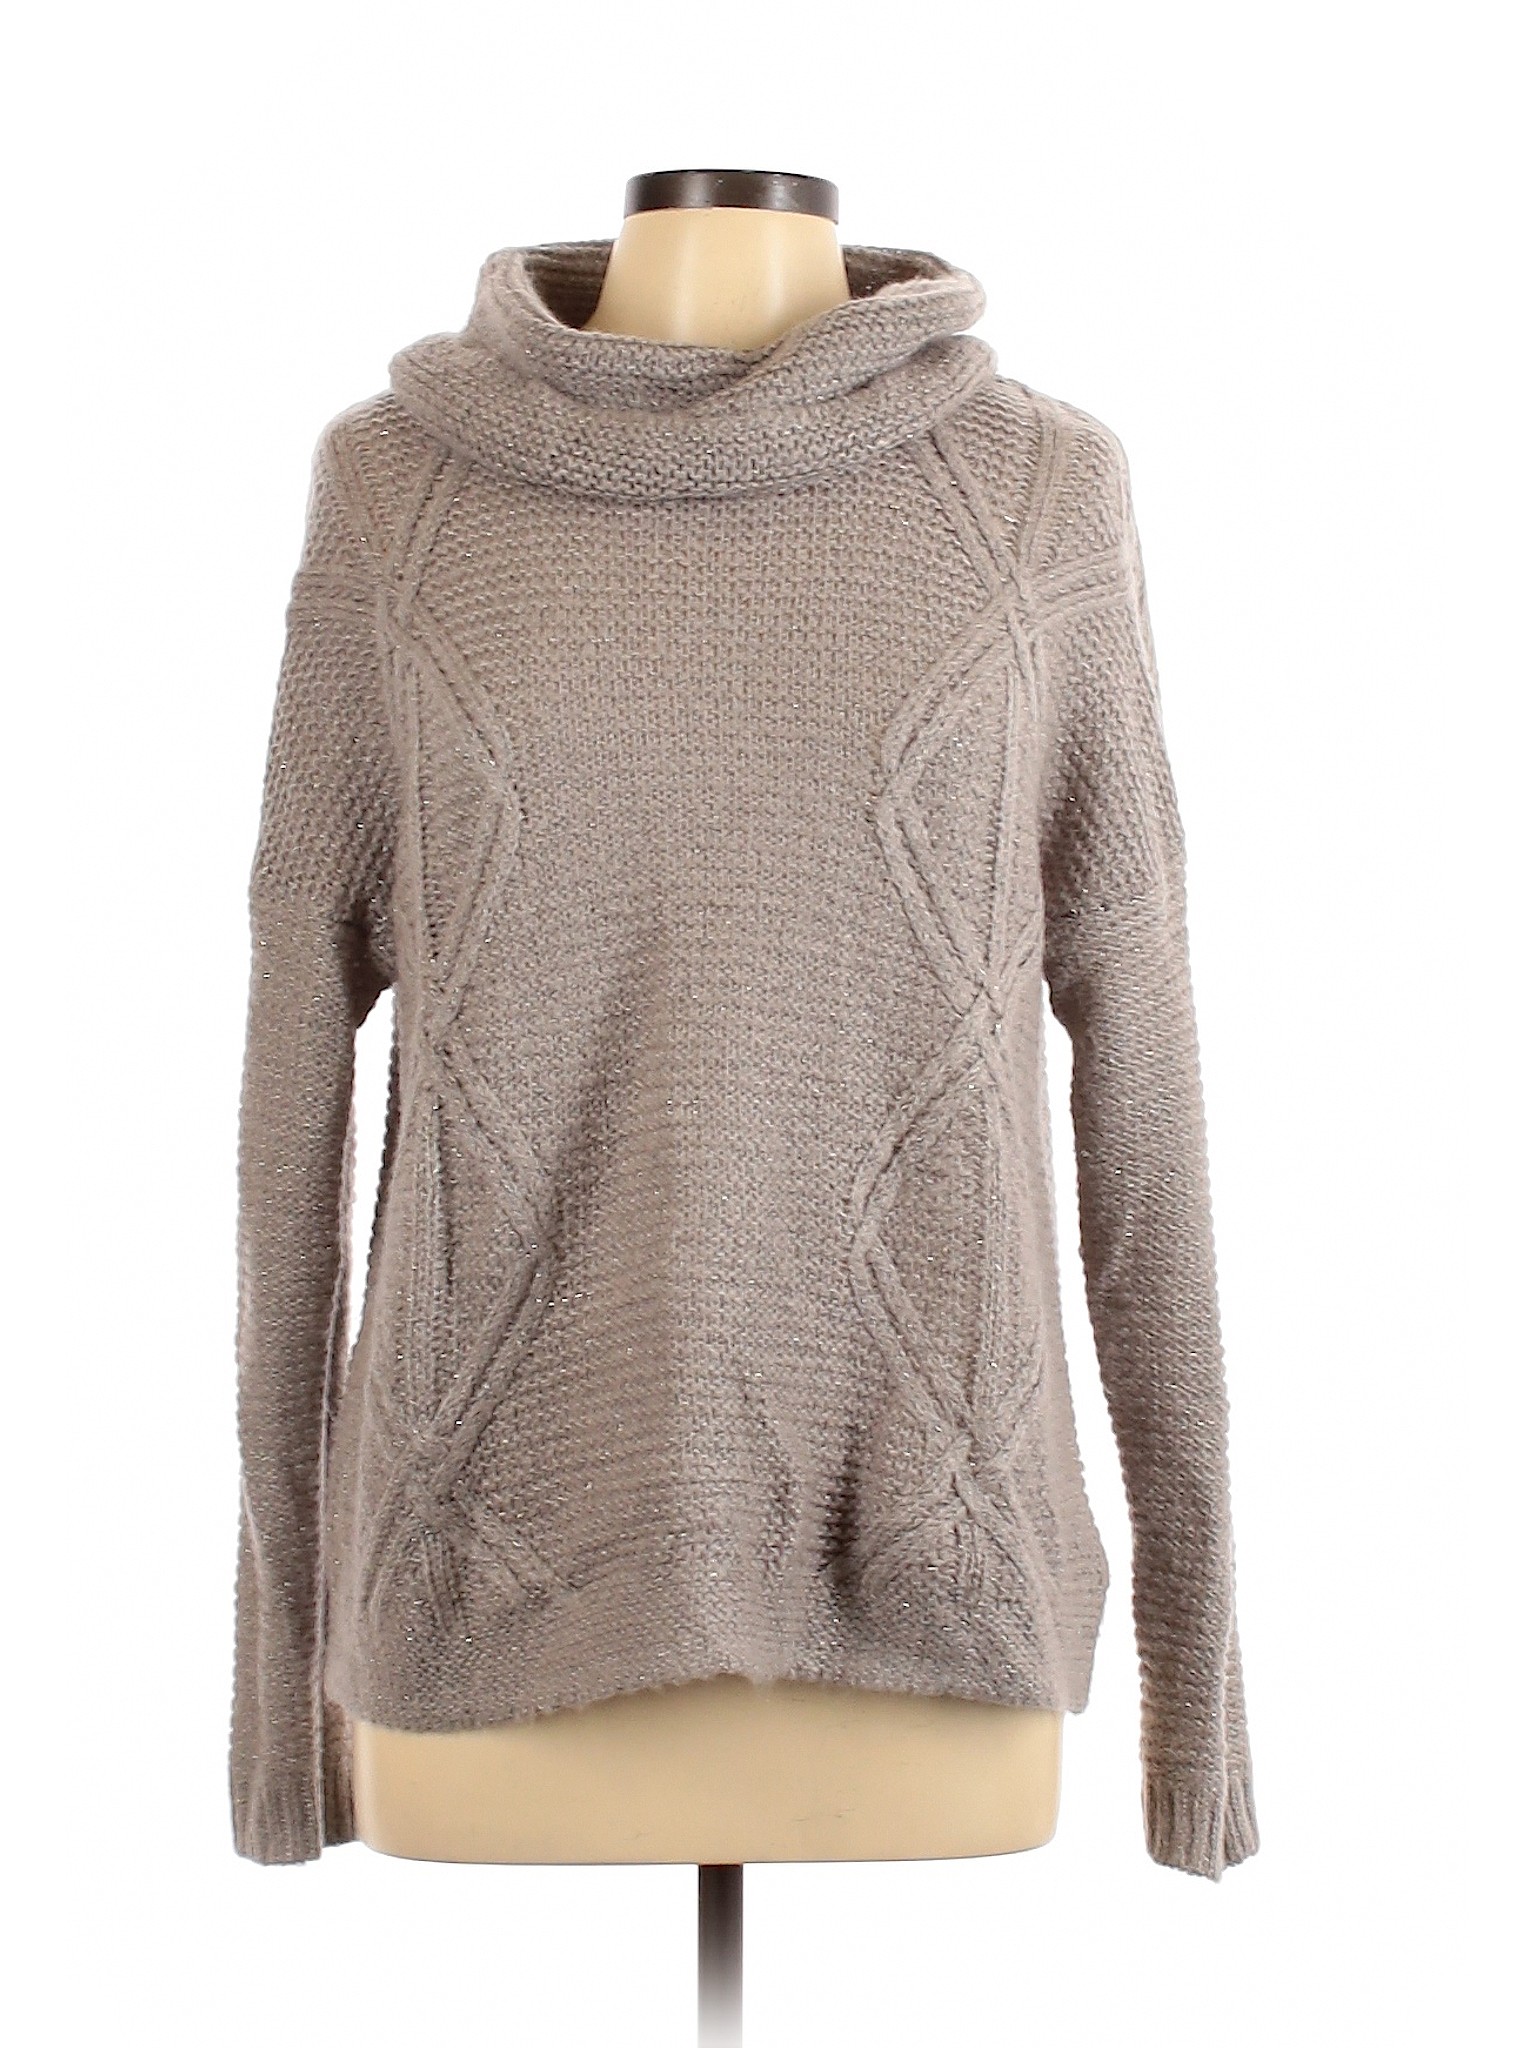 SONOMA life + style Women Brown Pullover Sweater L | eBay